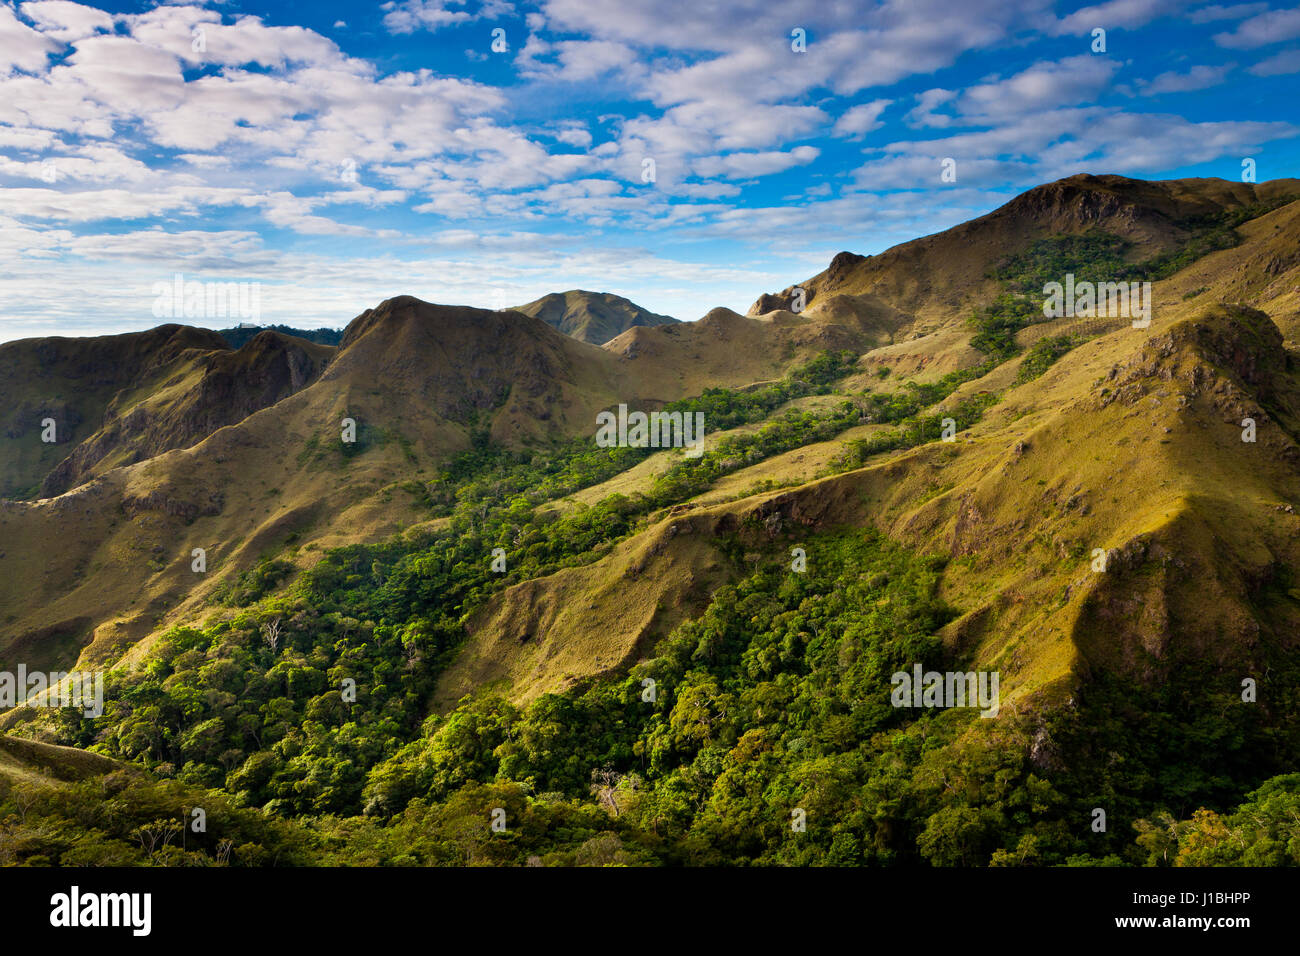 Beautiful Panama landscape in the mountains of Altos de Campana National Park, Panama province, Republic of Panama, Central America. Stock Photo